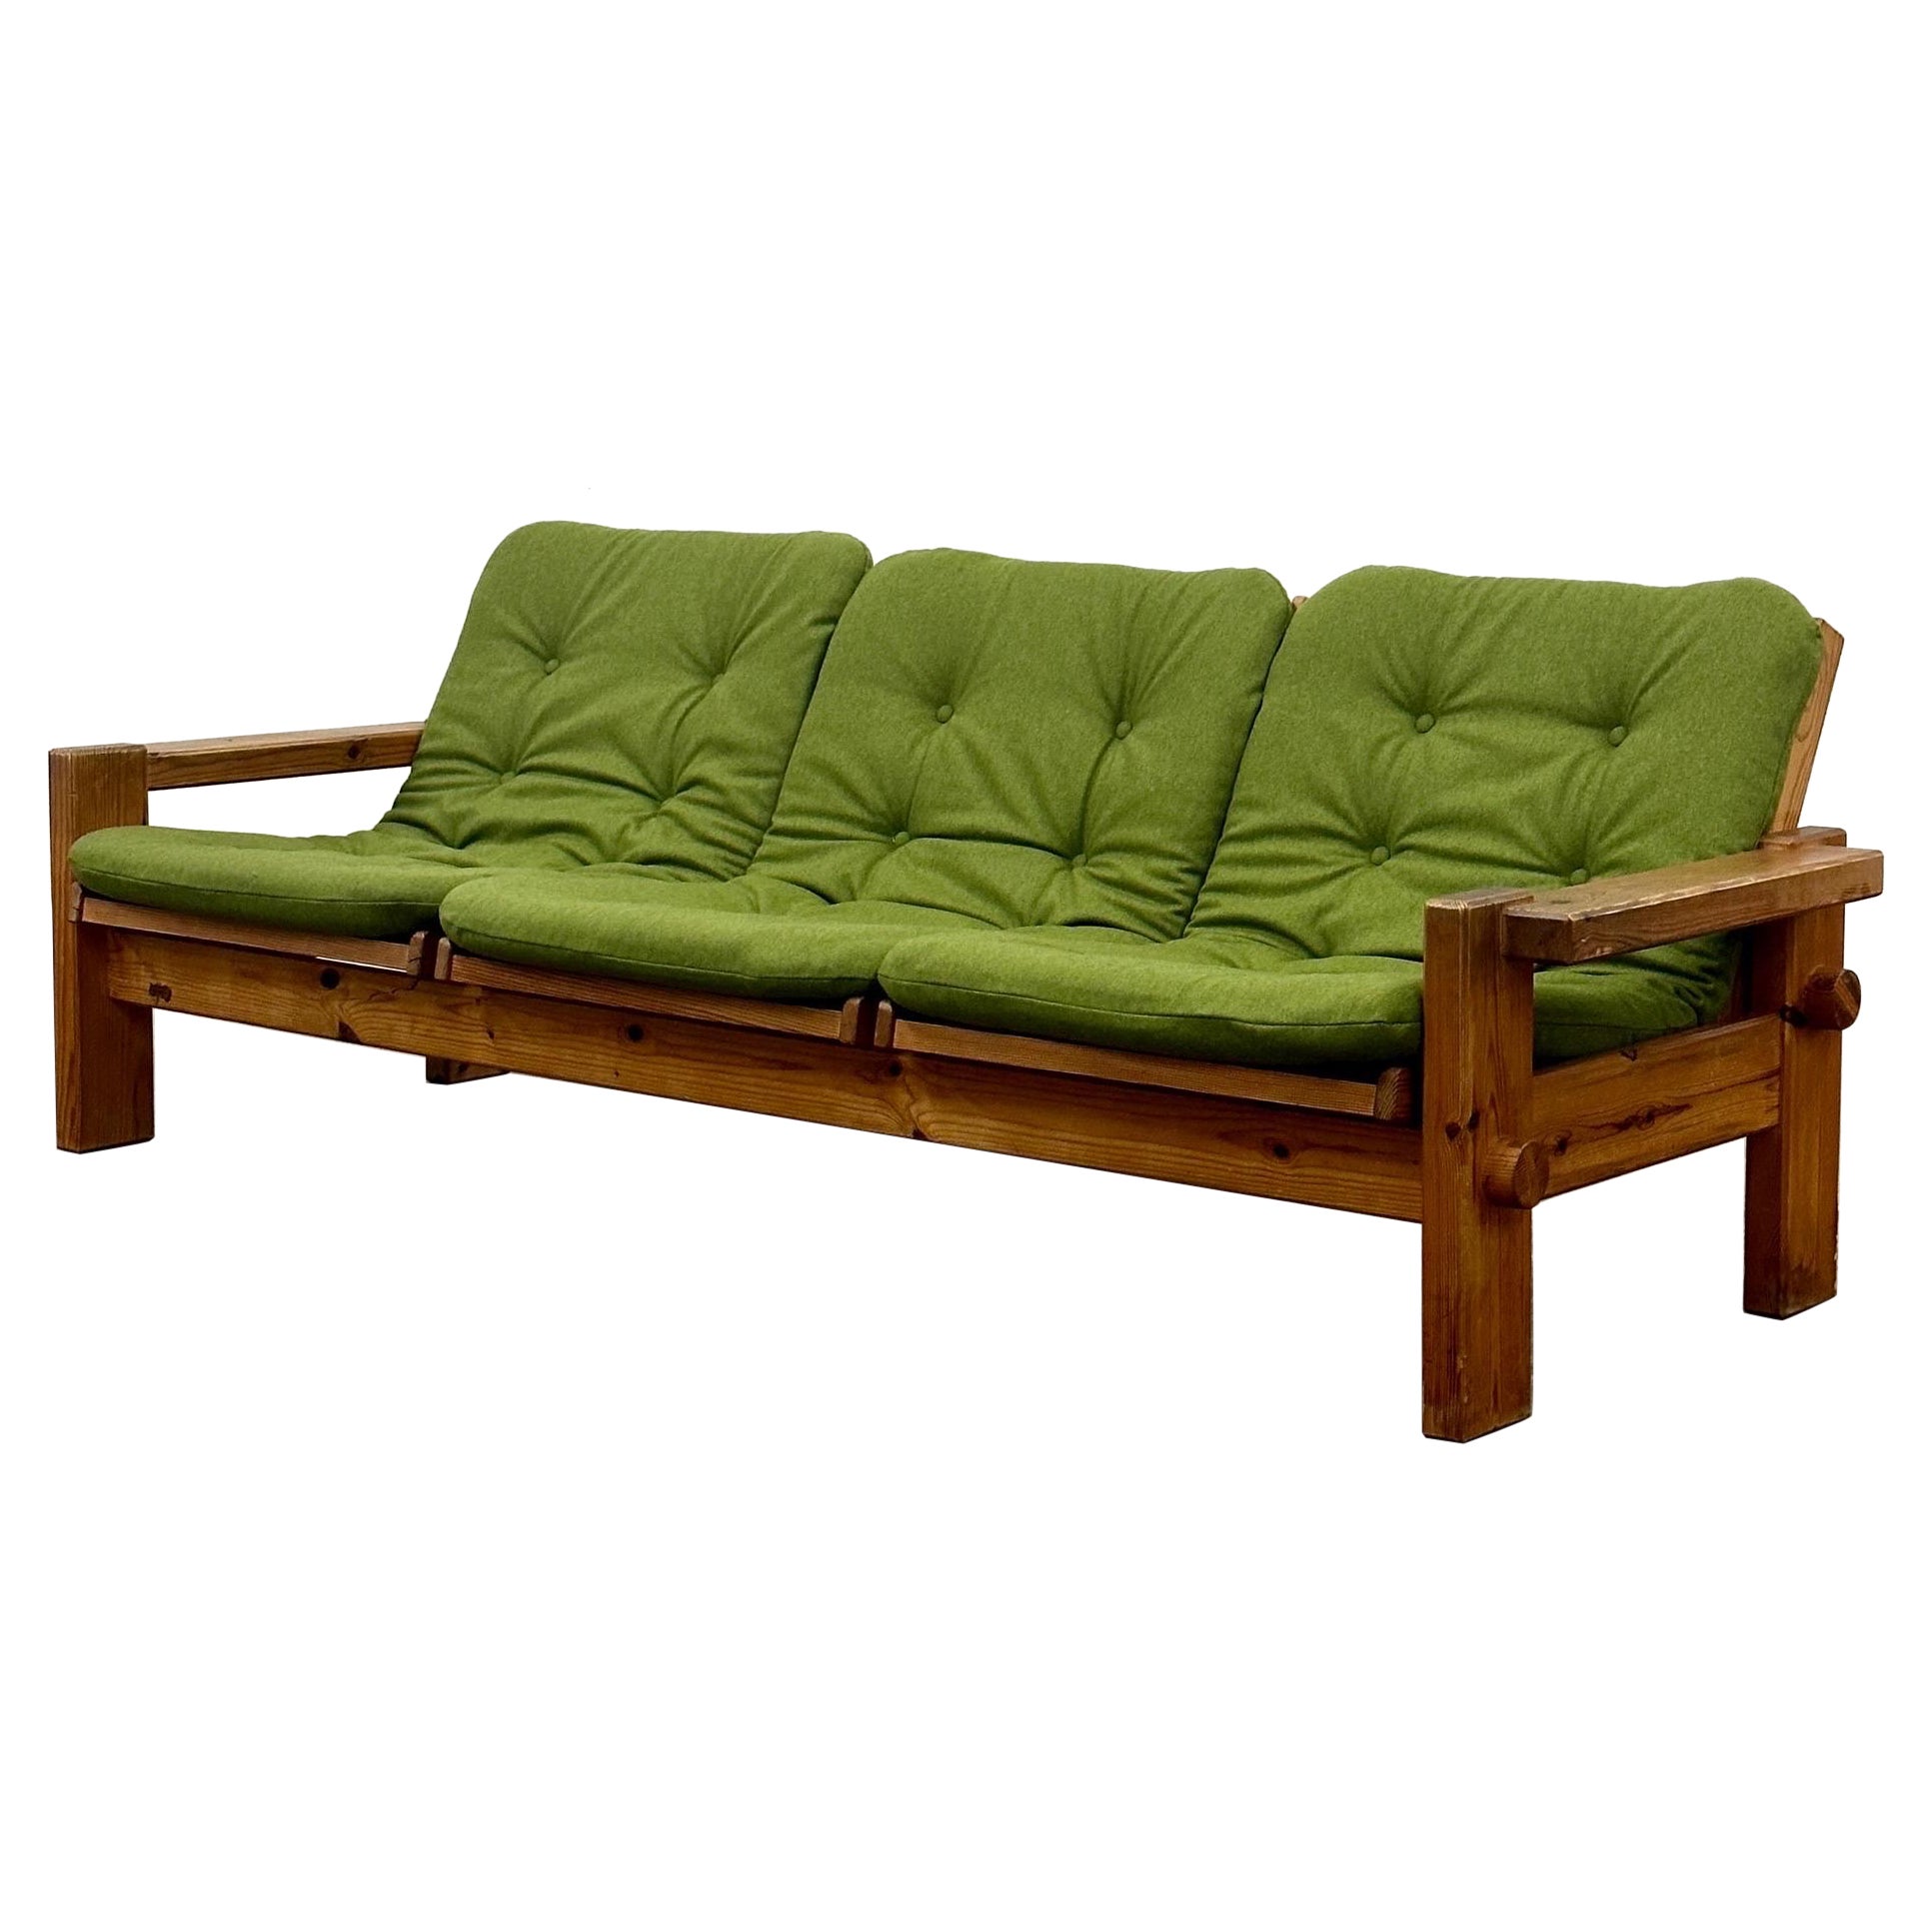 pine 104 sofa at Sofas 1stDibs sofa frame design, set, - wood pine Pine For wood | wood Sale sofa pine